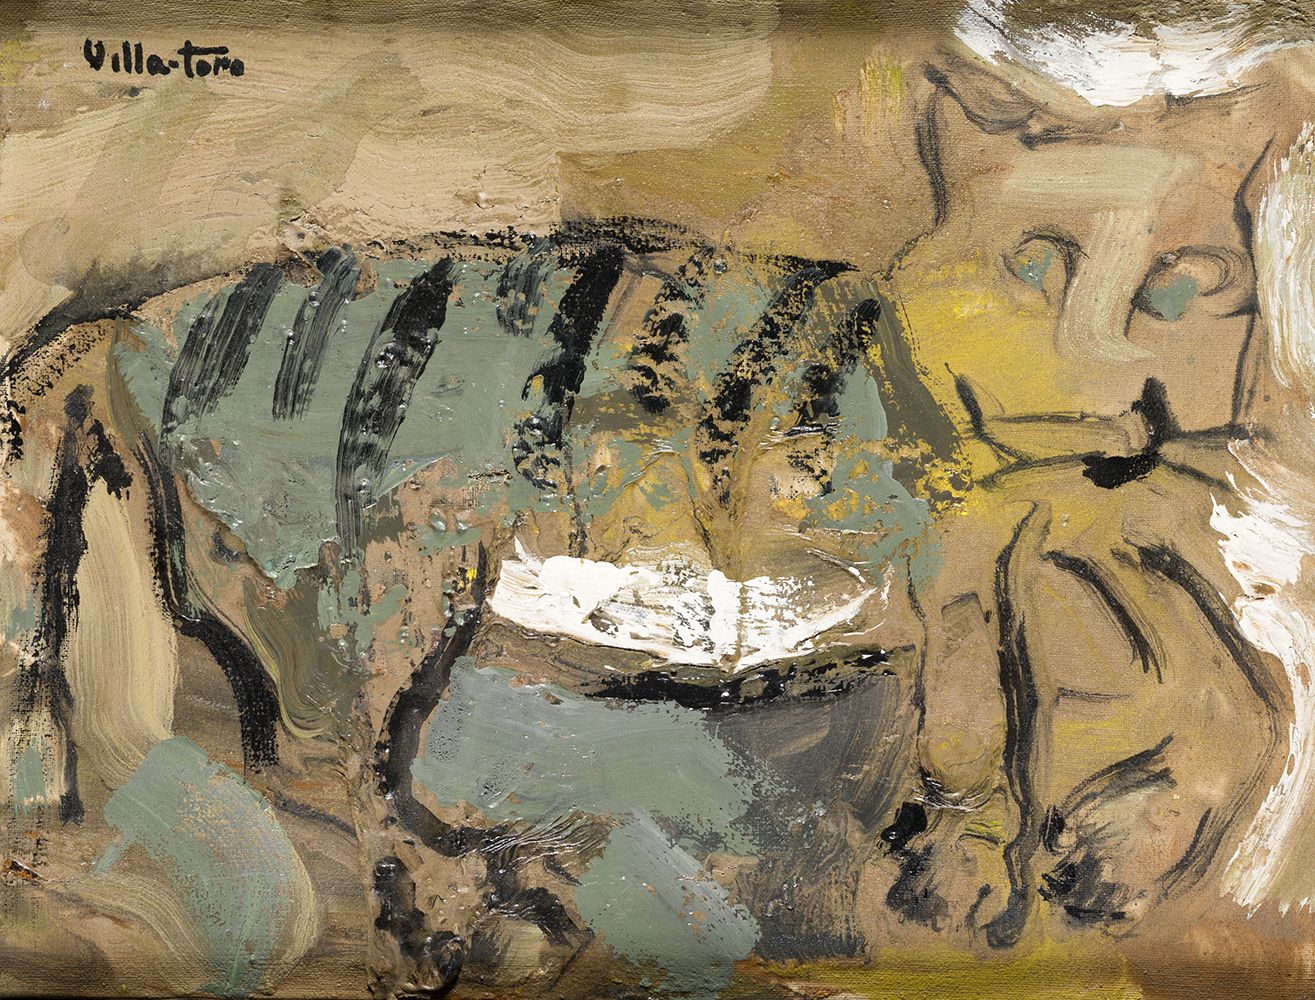 ANTONIO VILLA-TORO (1949 / .) "Feline" . 305 x 40 cm. Mixed media on canvas